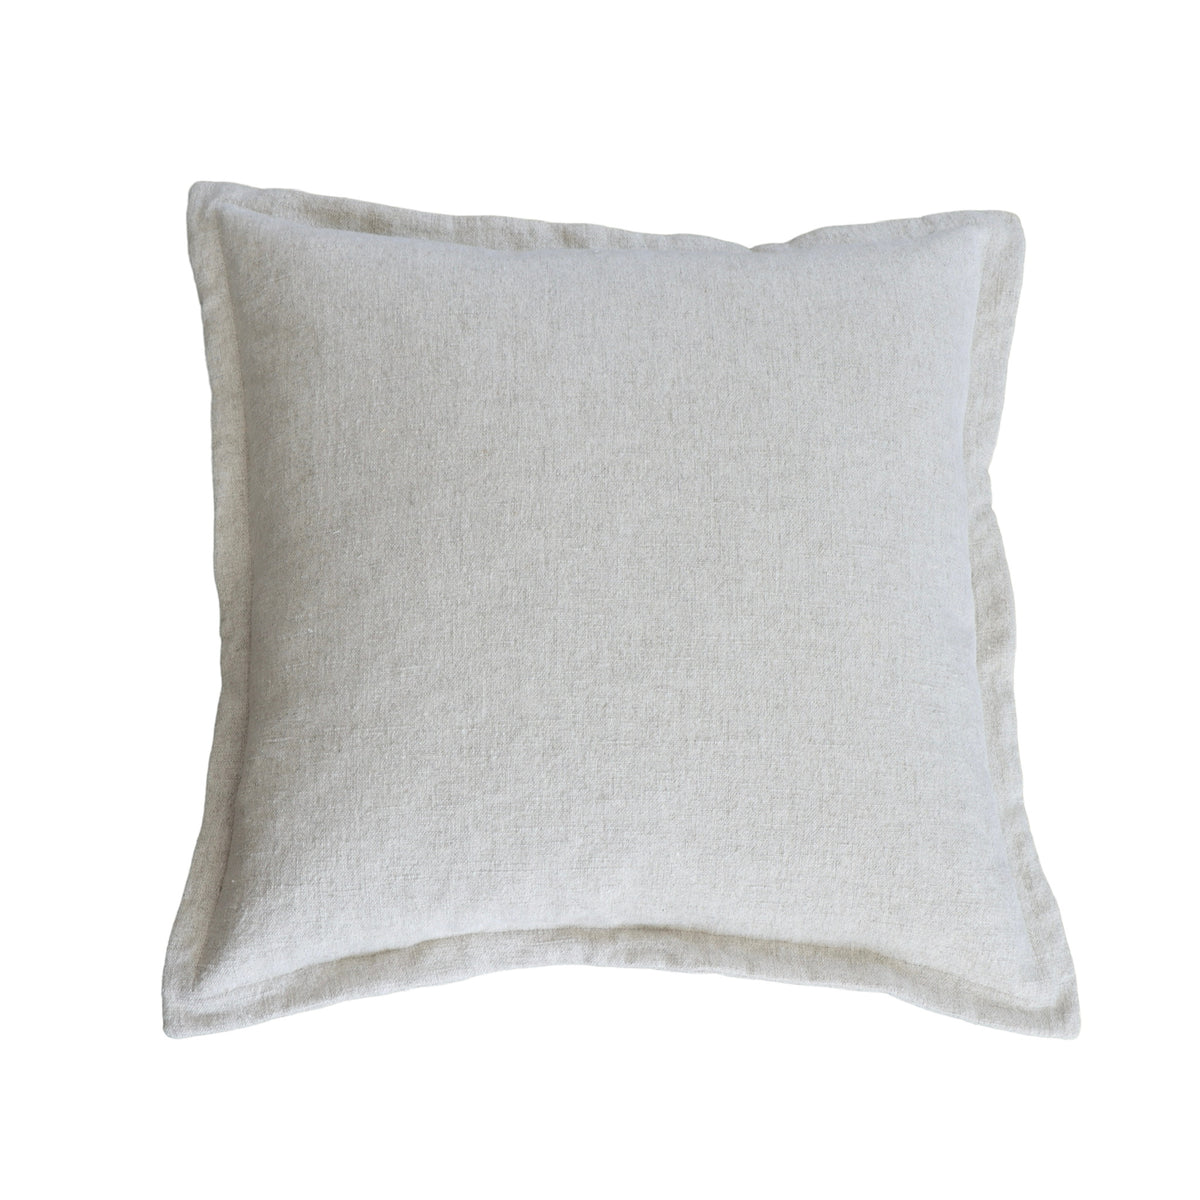 Almond Woven Linen and Cotton Pillow - Holistic Habitat 